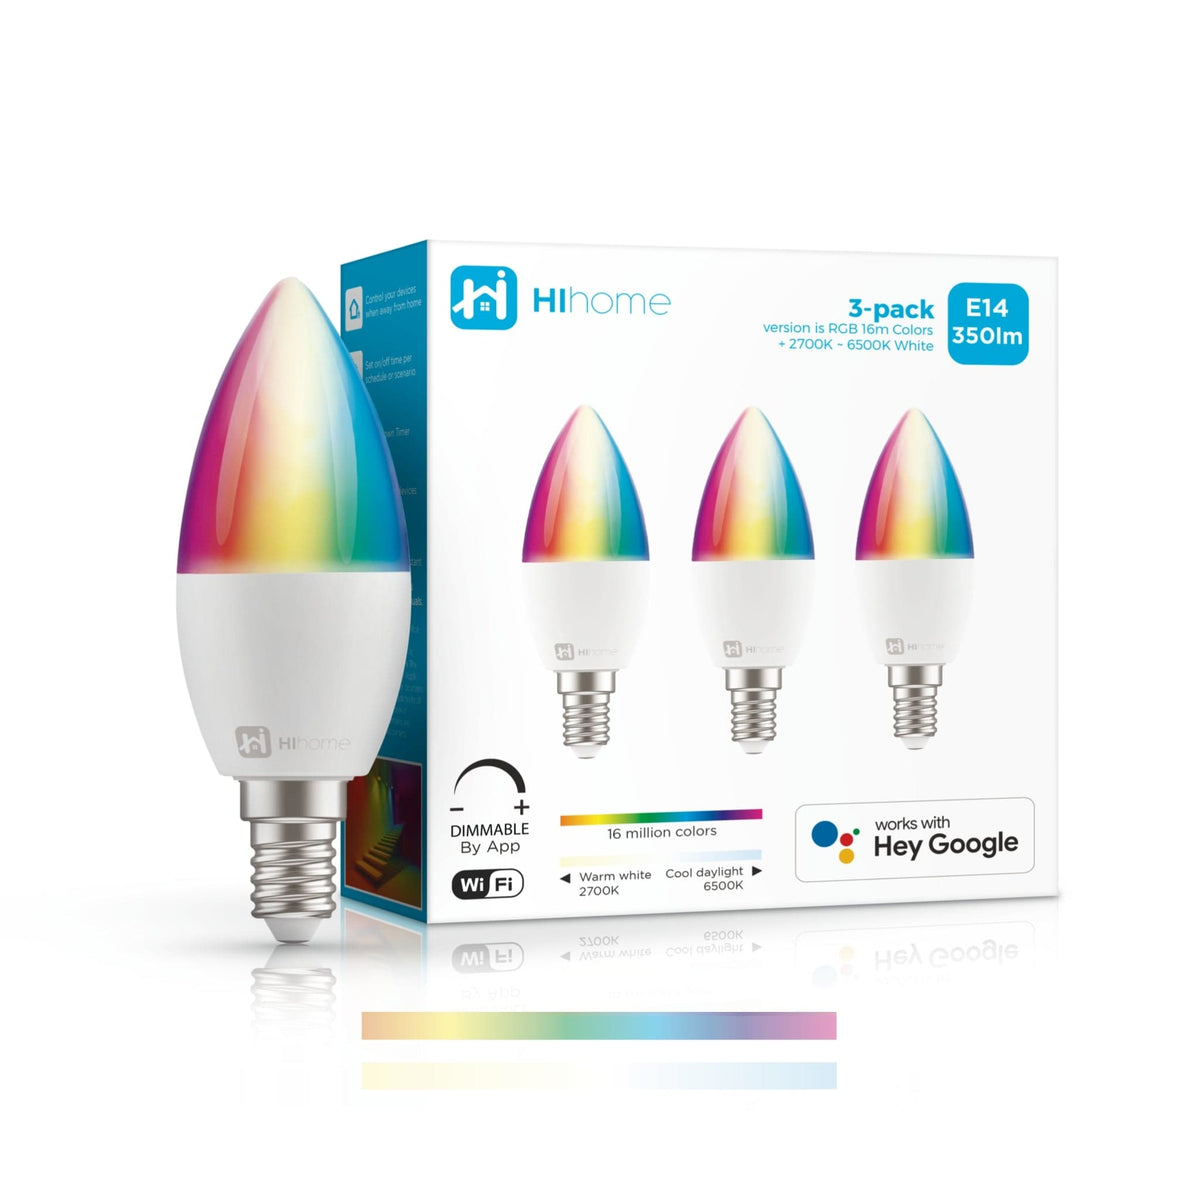 3-pack Hihome Smart LED WiFi Bulb E14 Gen.2 RGB 16M Colors + Warm White 2700K to Cool White 6500K